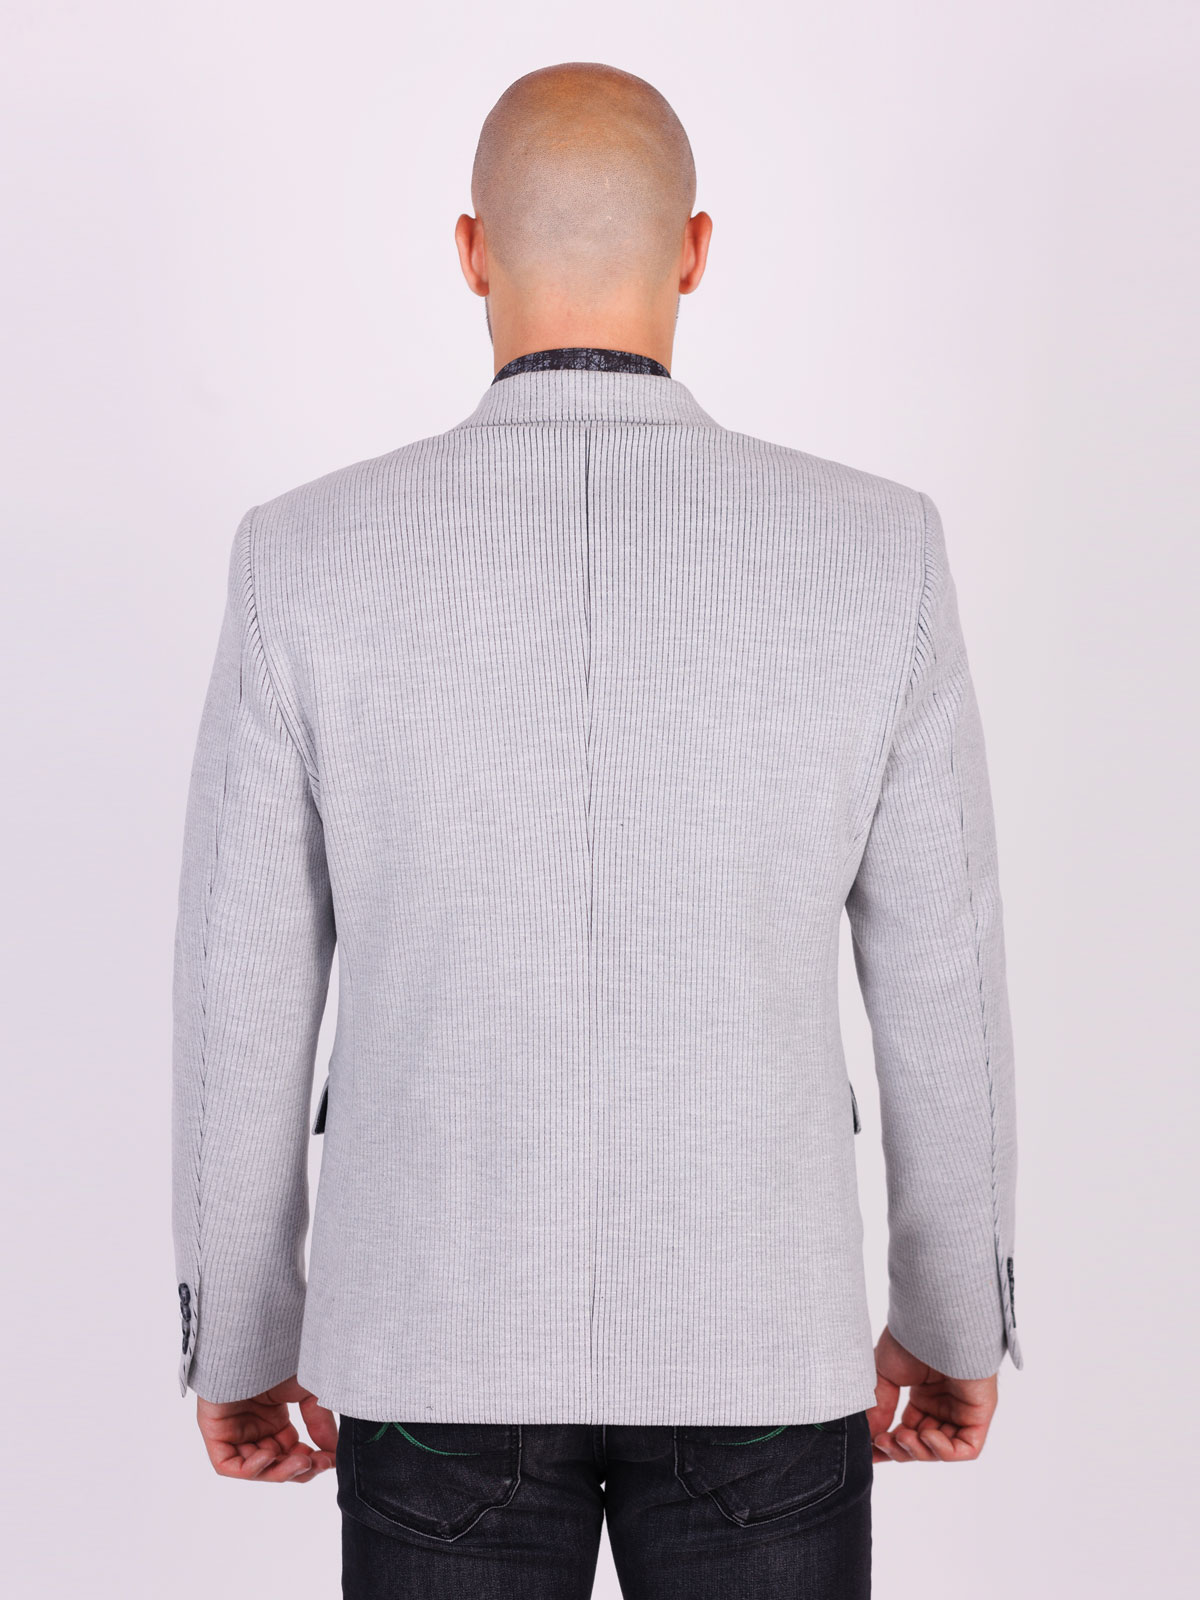 Mens jacket in light gray - 61095 € 145.10 img2